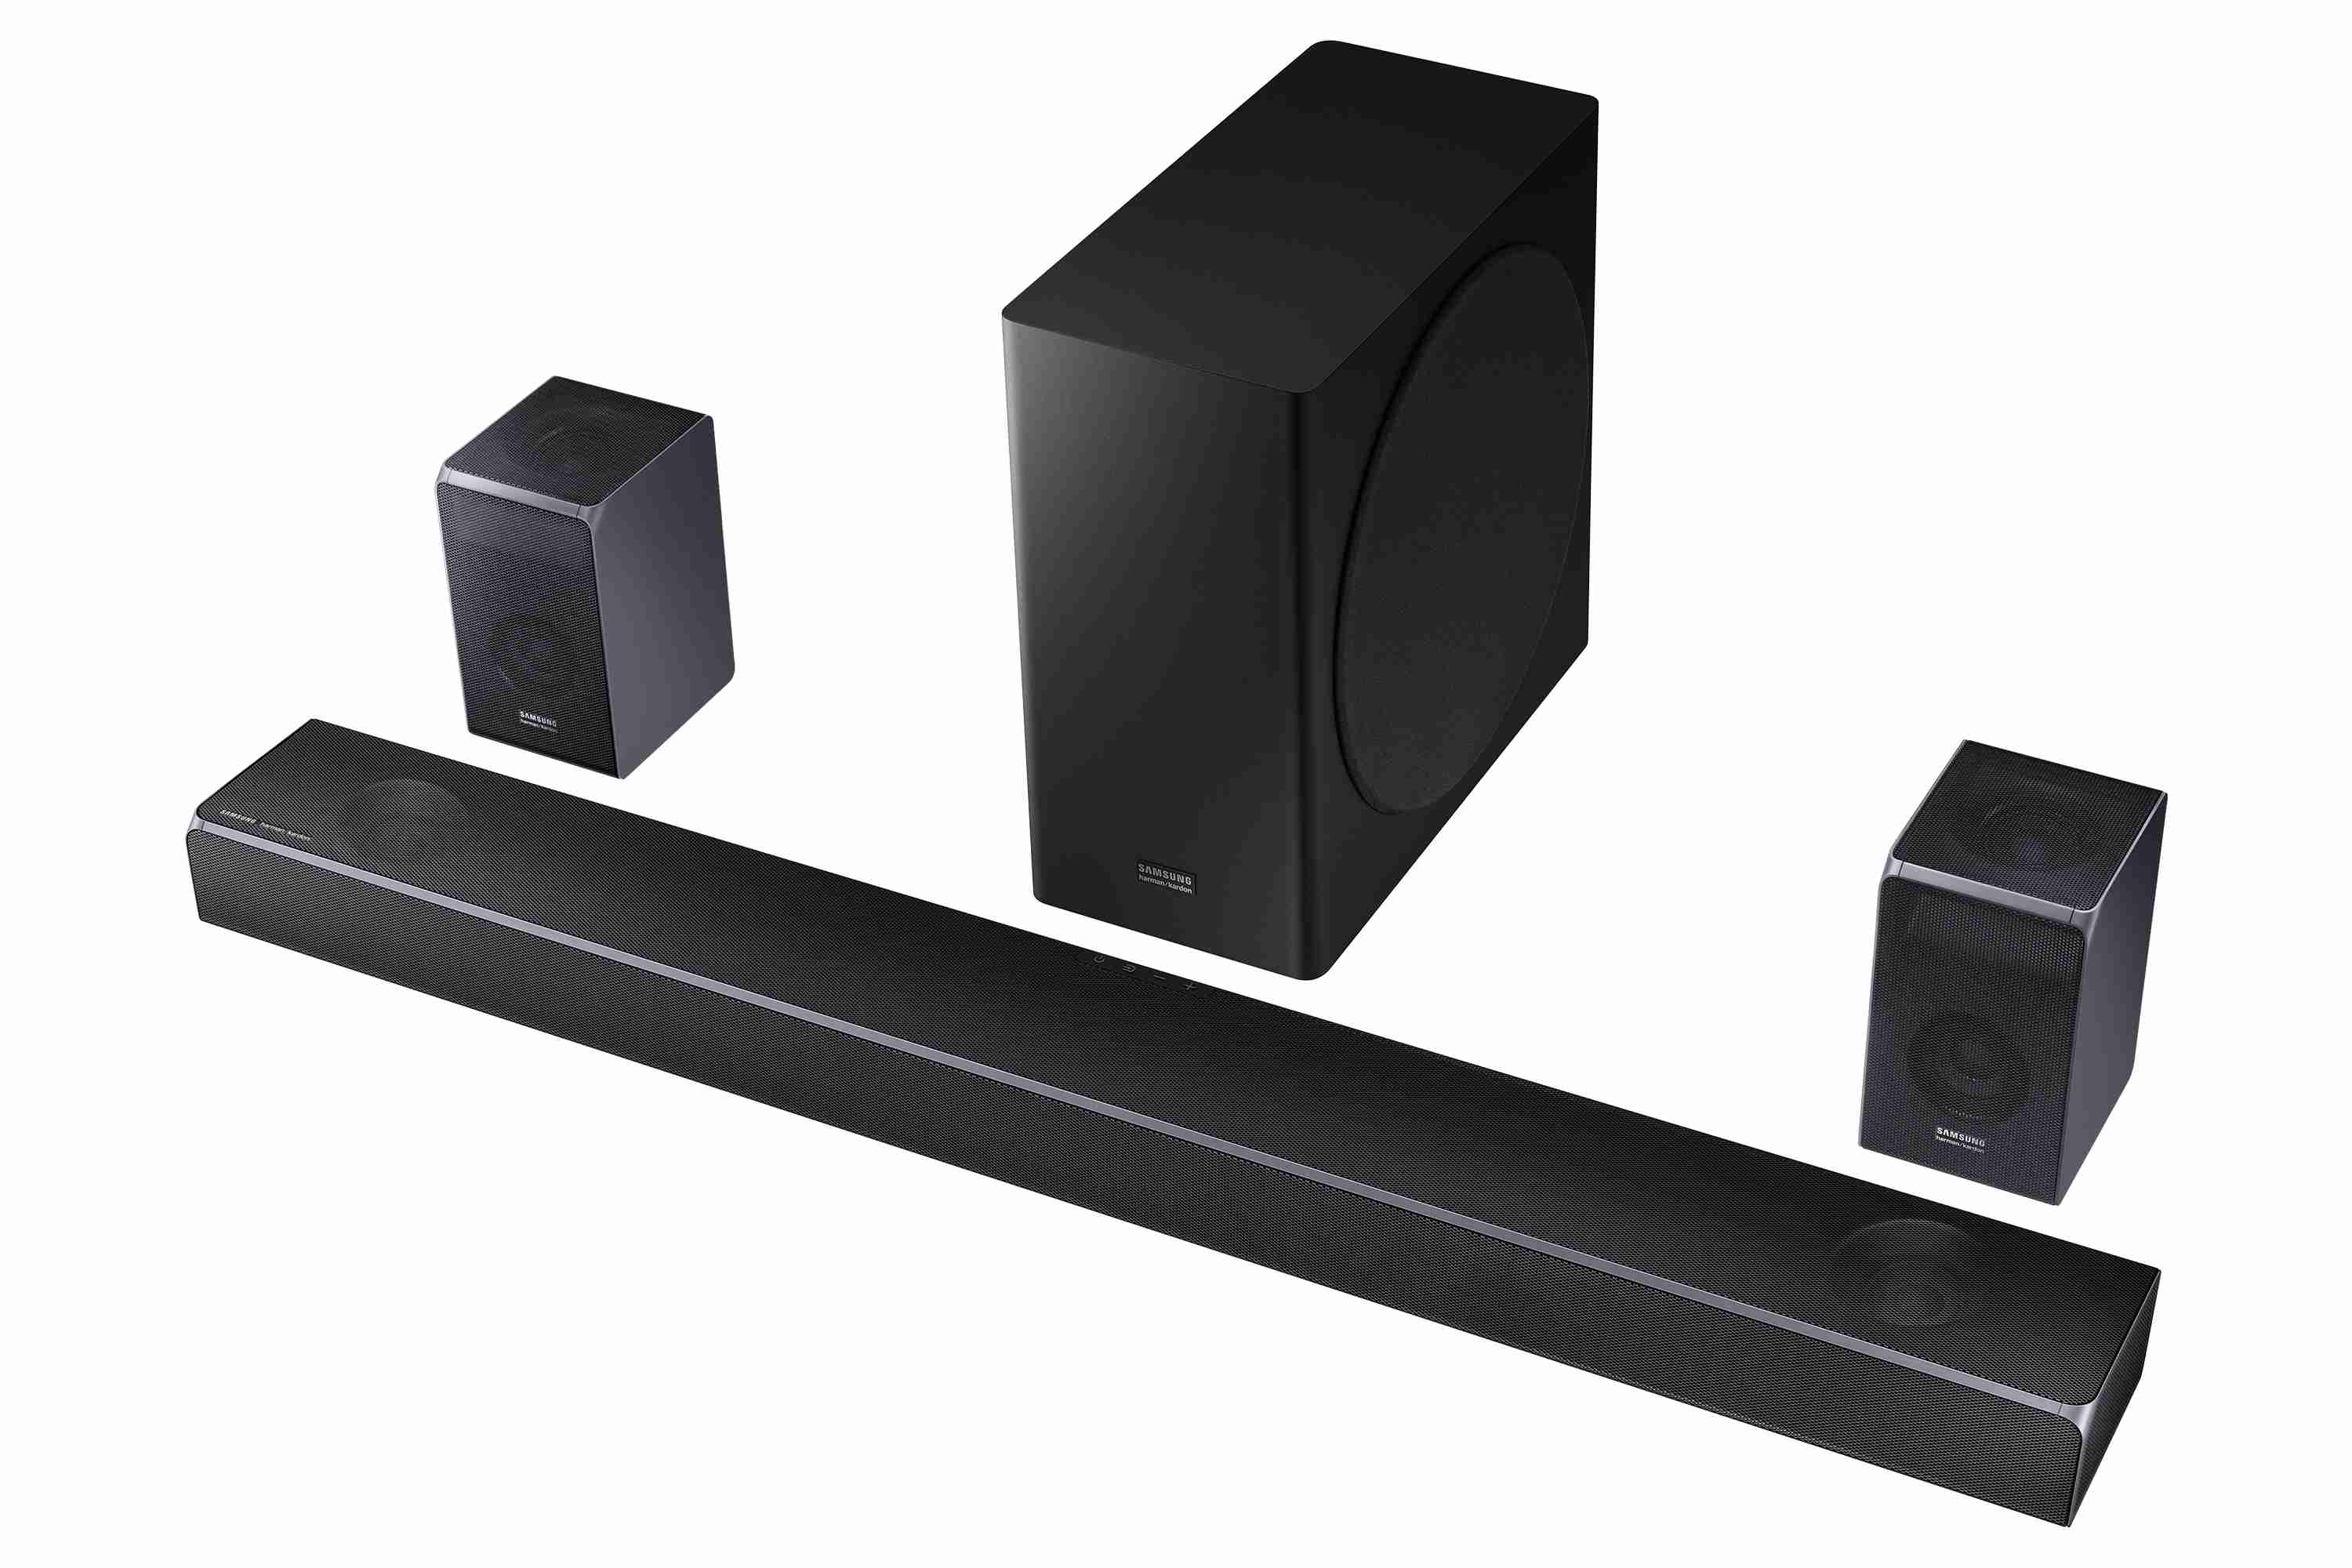 Samsung Barras de Sonido optimizadas para TV QLED - sonido de cine